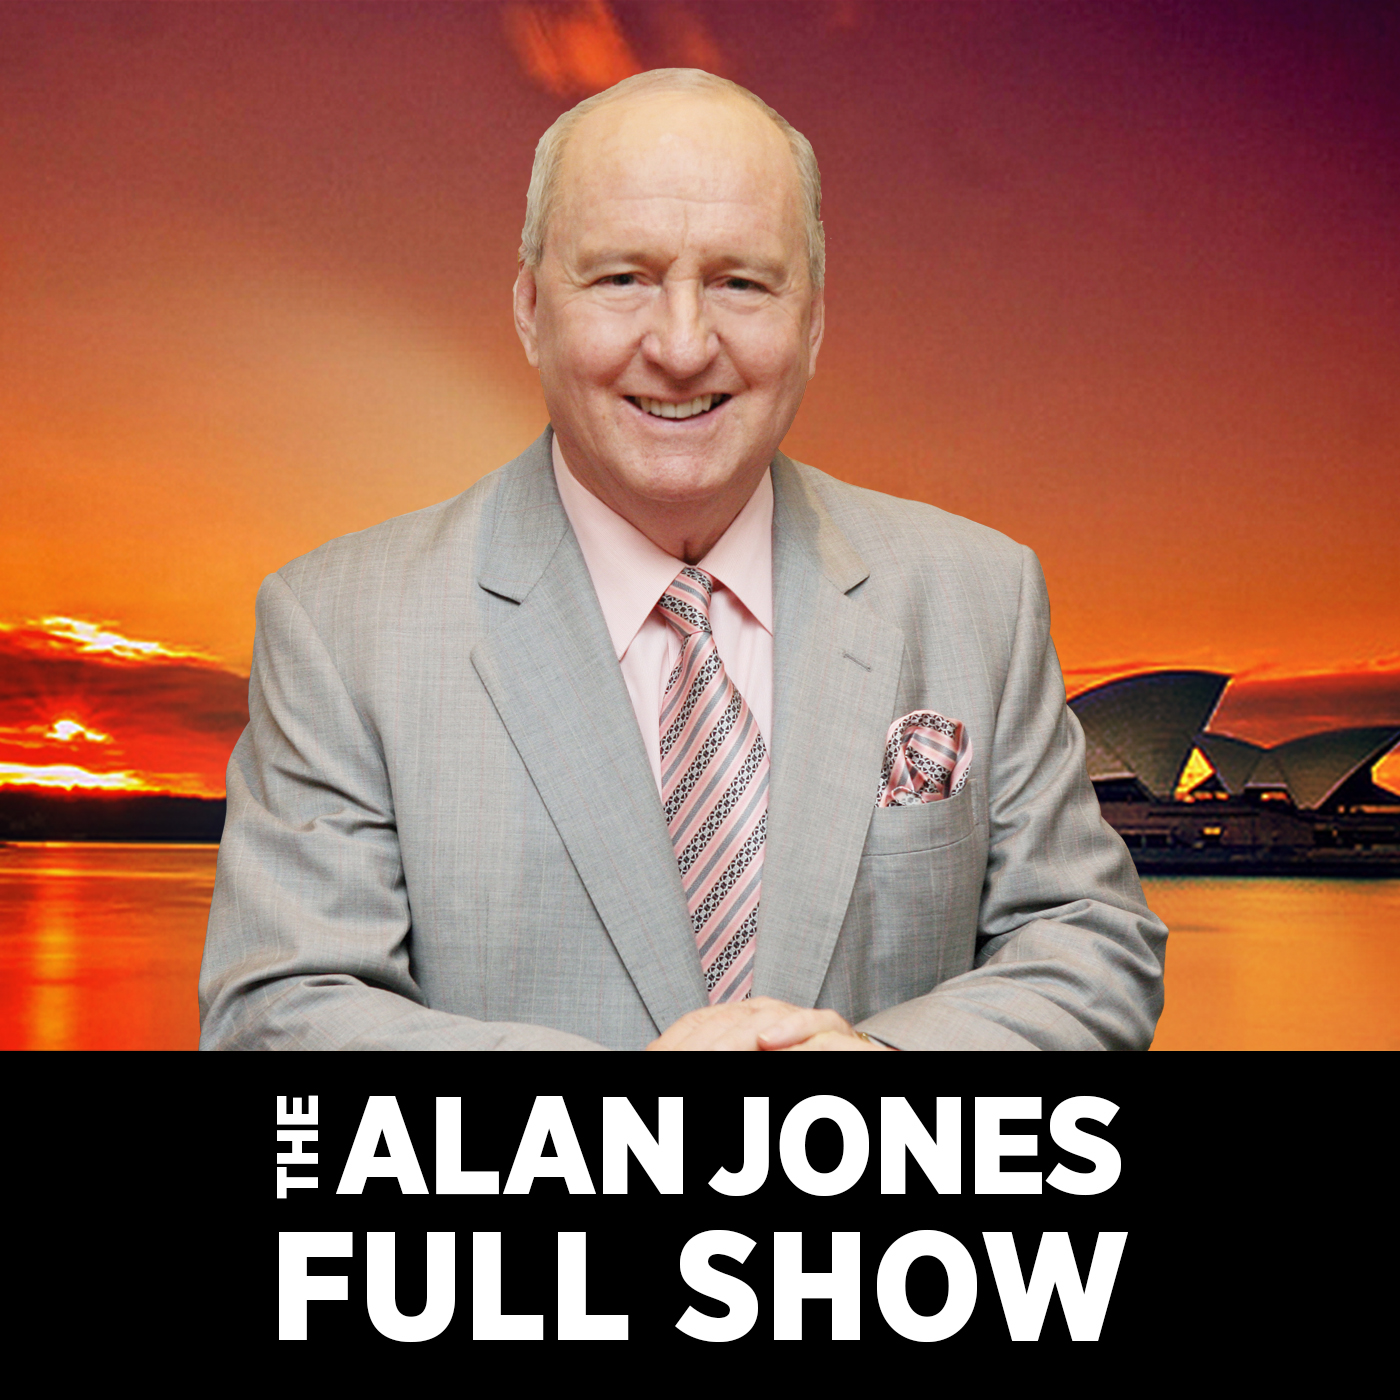 Alan Jones Full Show Podcast 21st May 2020